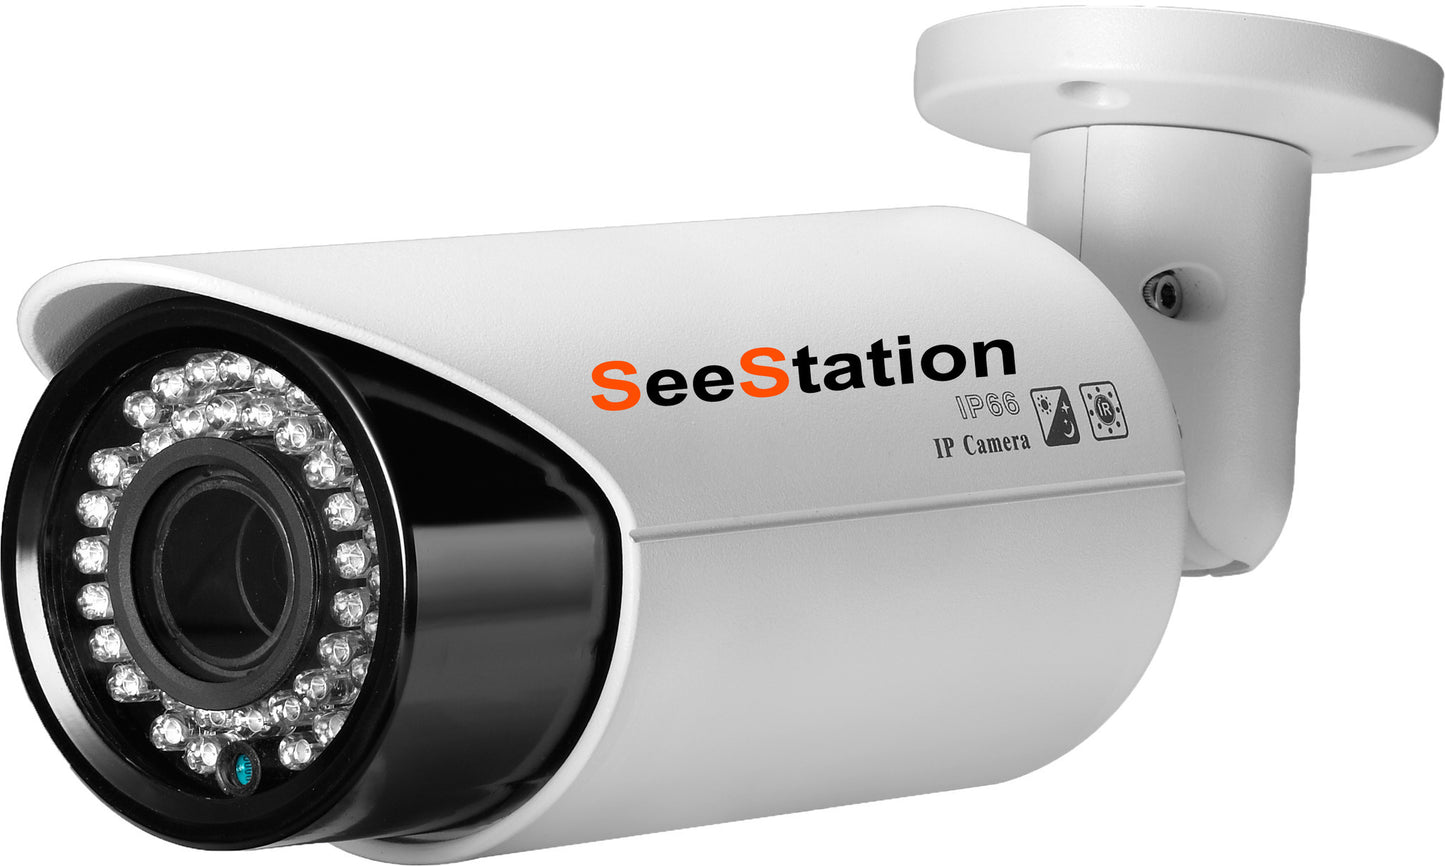 SeeStation (IP-D) CIP1150IV9-AW IP Bullet Camera 1.3MP IR POE ONVIF 2.8-12mm Varifocal Lens